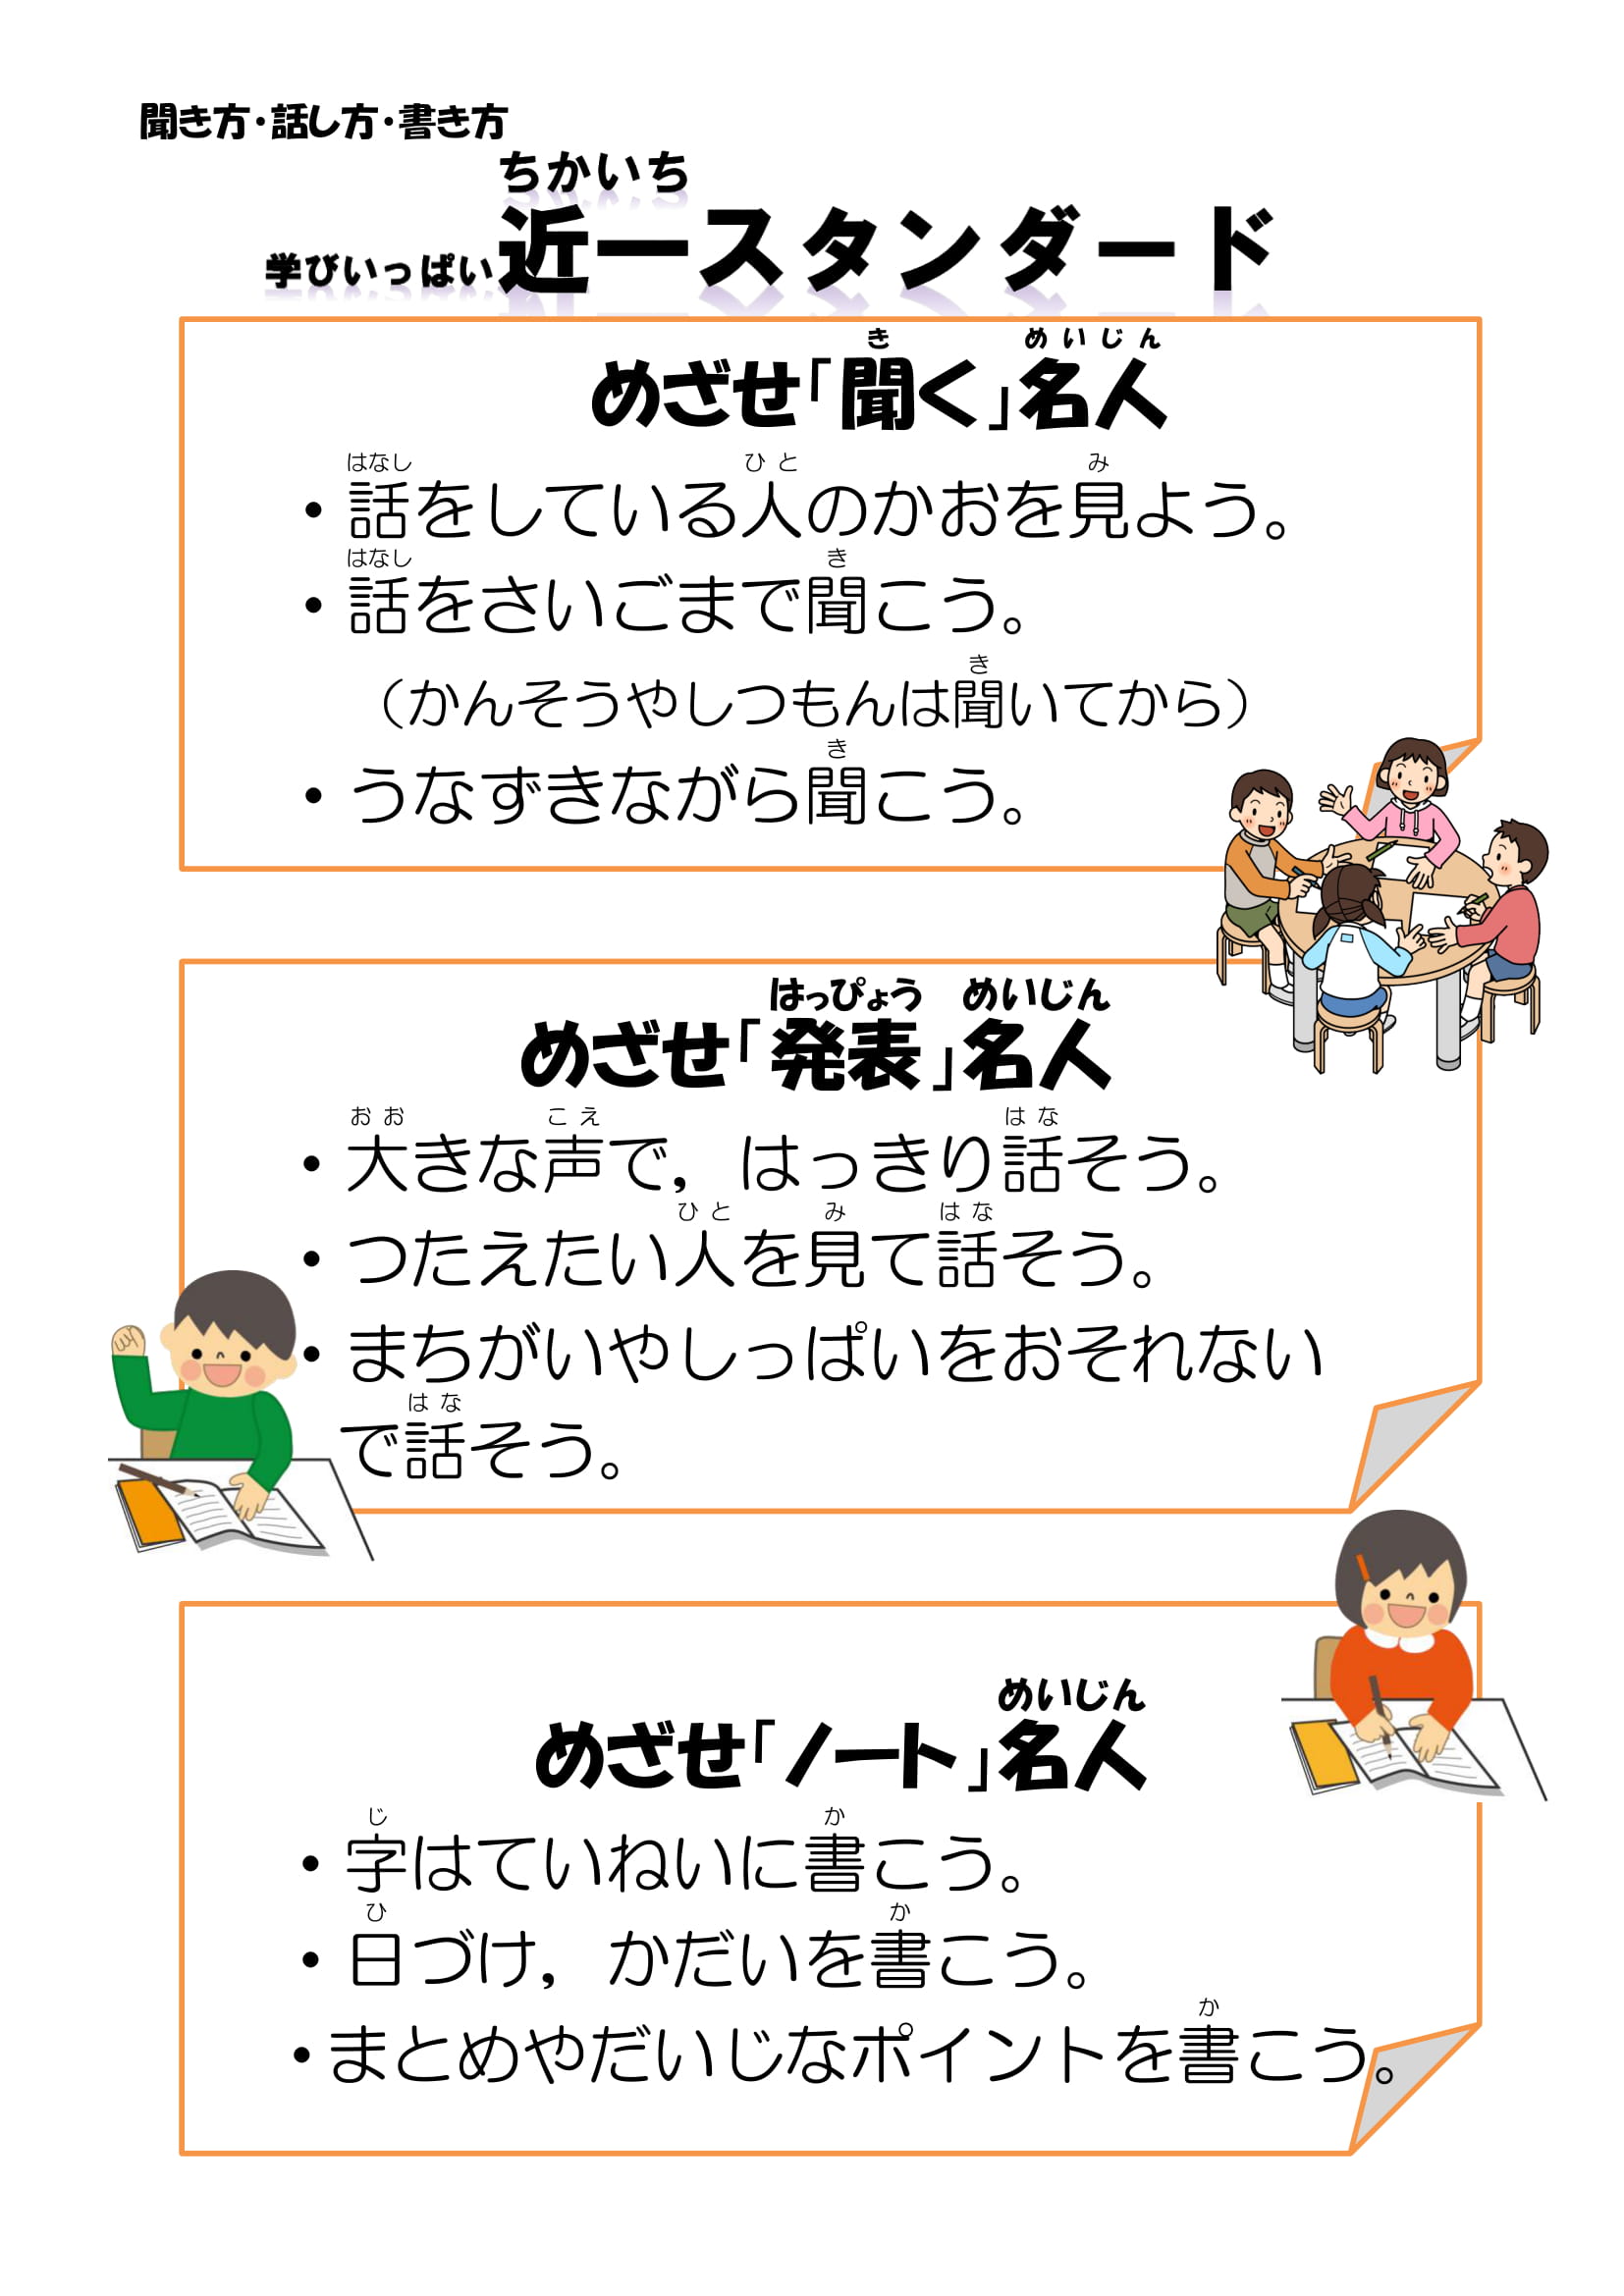 http://www.asahikawa-hkd.ed.jp/chikabumidaiichi-els/%E8%81%9E%E3%81%8D%E6%96%B9%E3%83%BB%E8%A9%B1%E3%81%97%E6%96%B9%E7%B7%A8-1.jpg